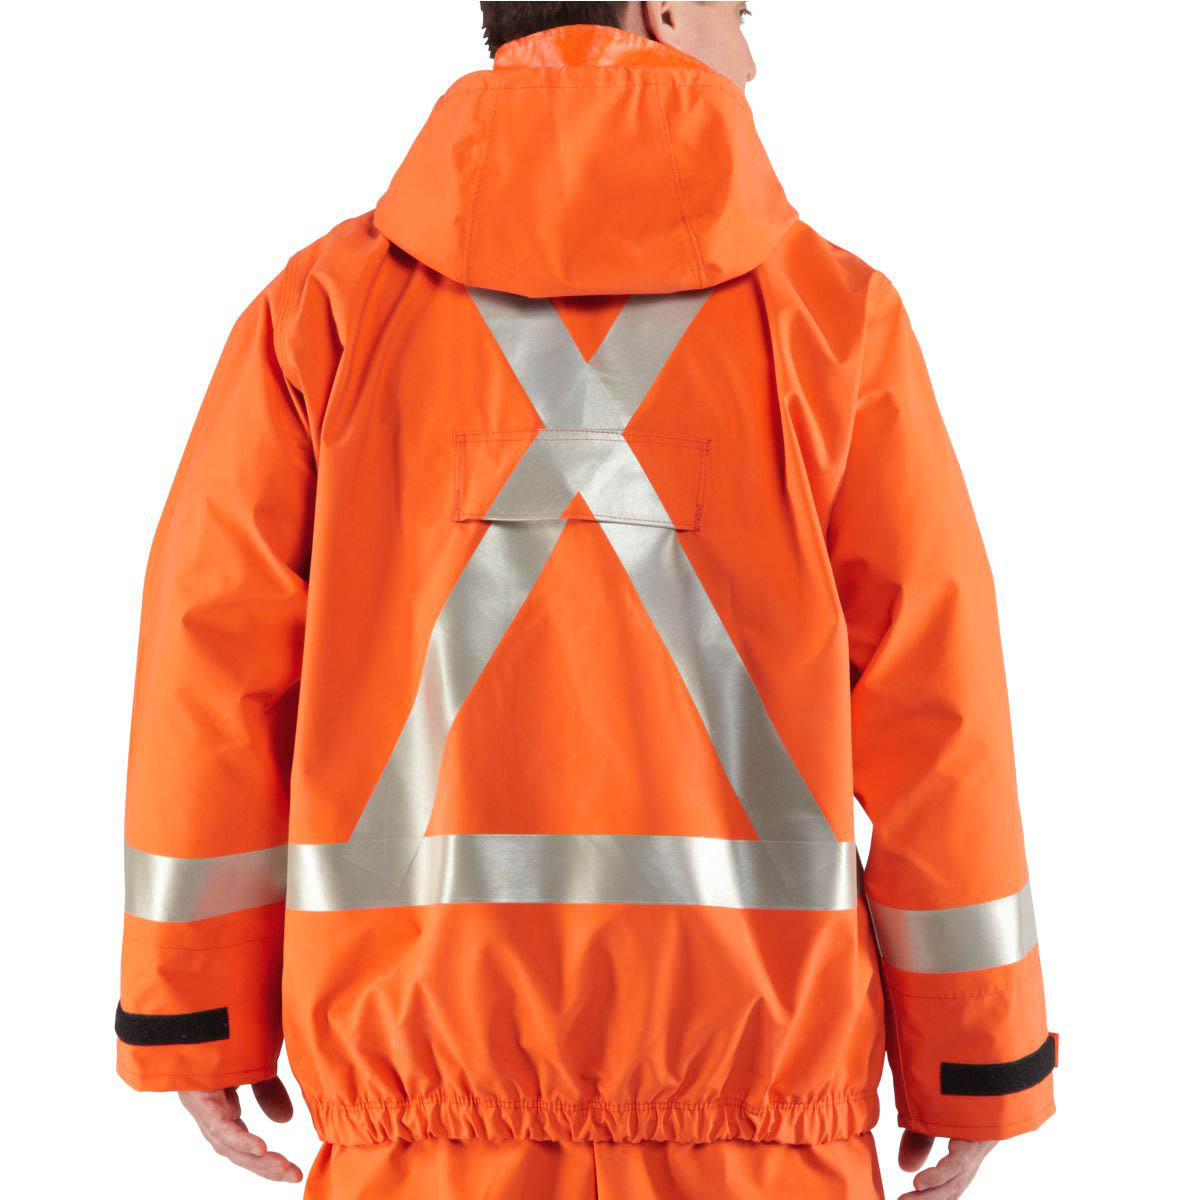 Carhartt Men's Flame Resistant Rain Jacket